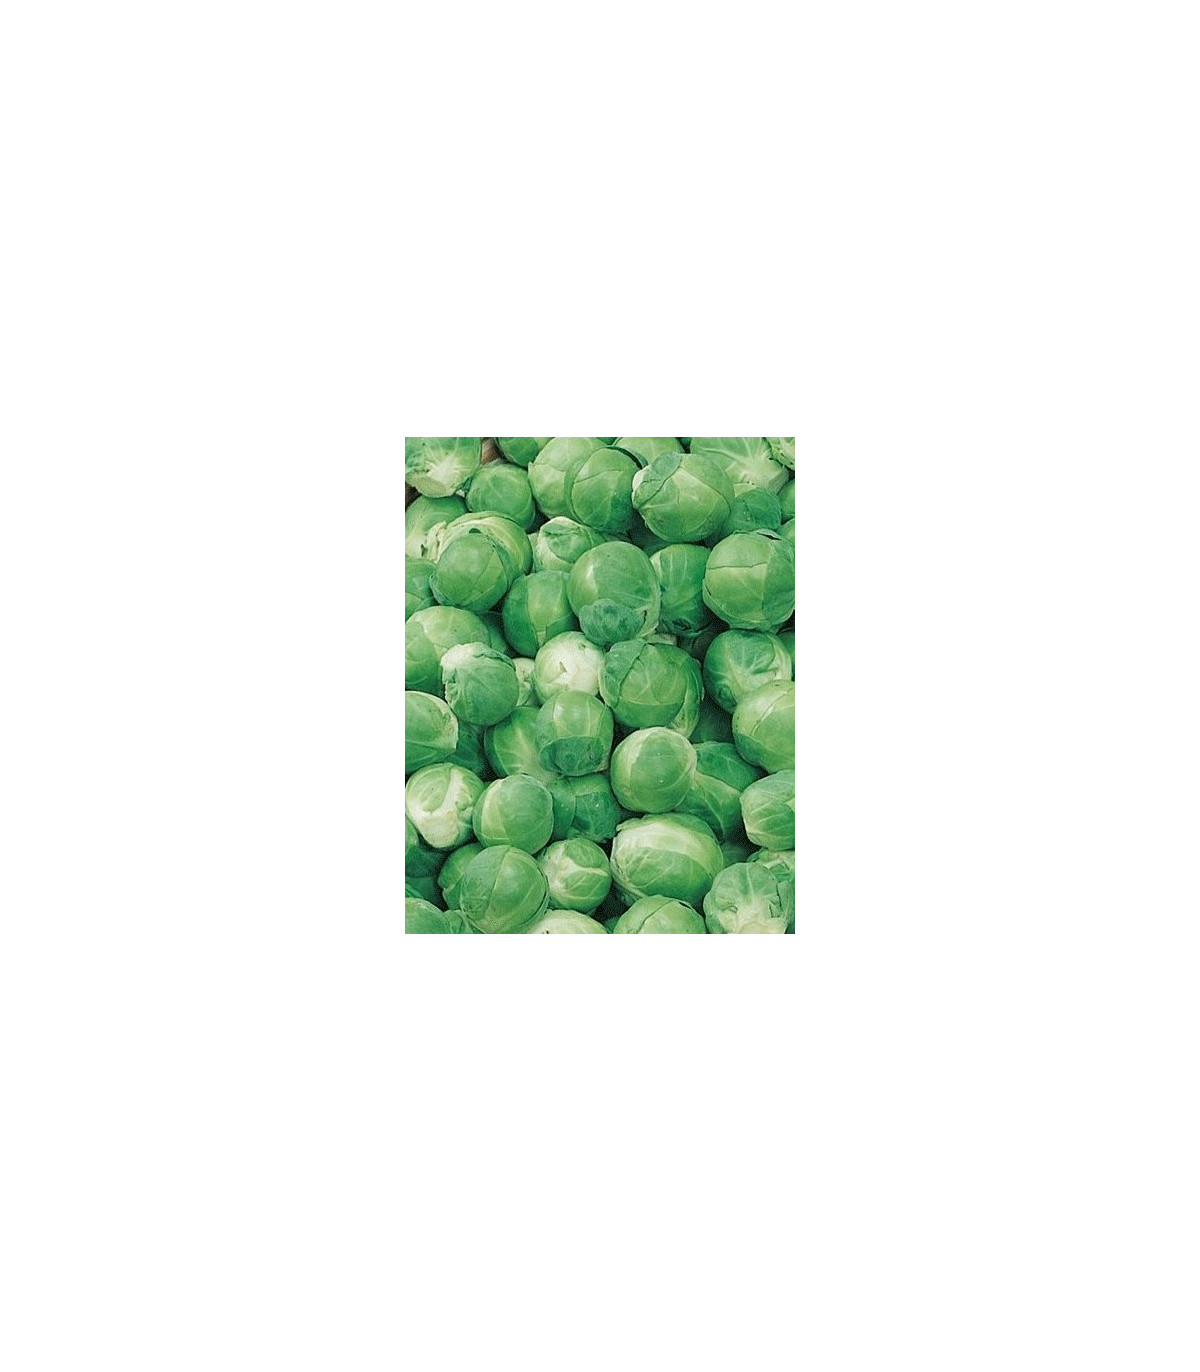 Kel ružičkový Hilds Ideal - Brassica oleracea - semiačka - 0,5 g